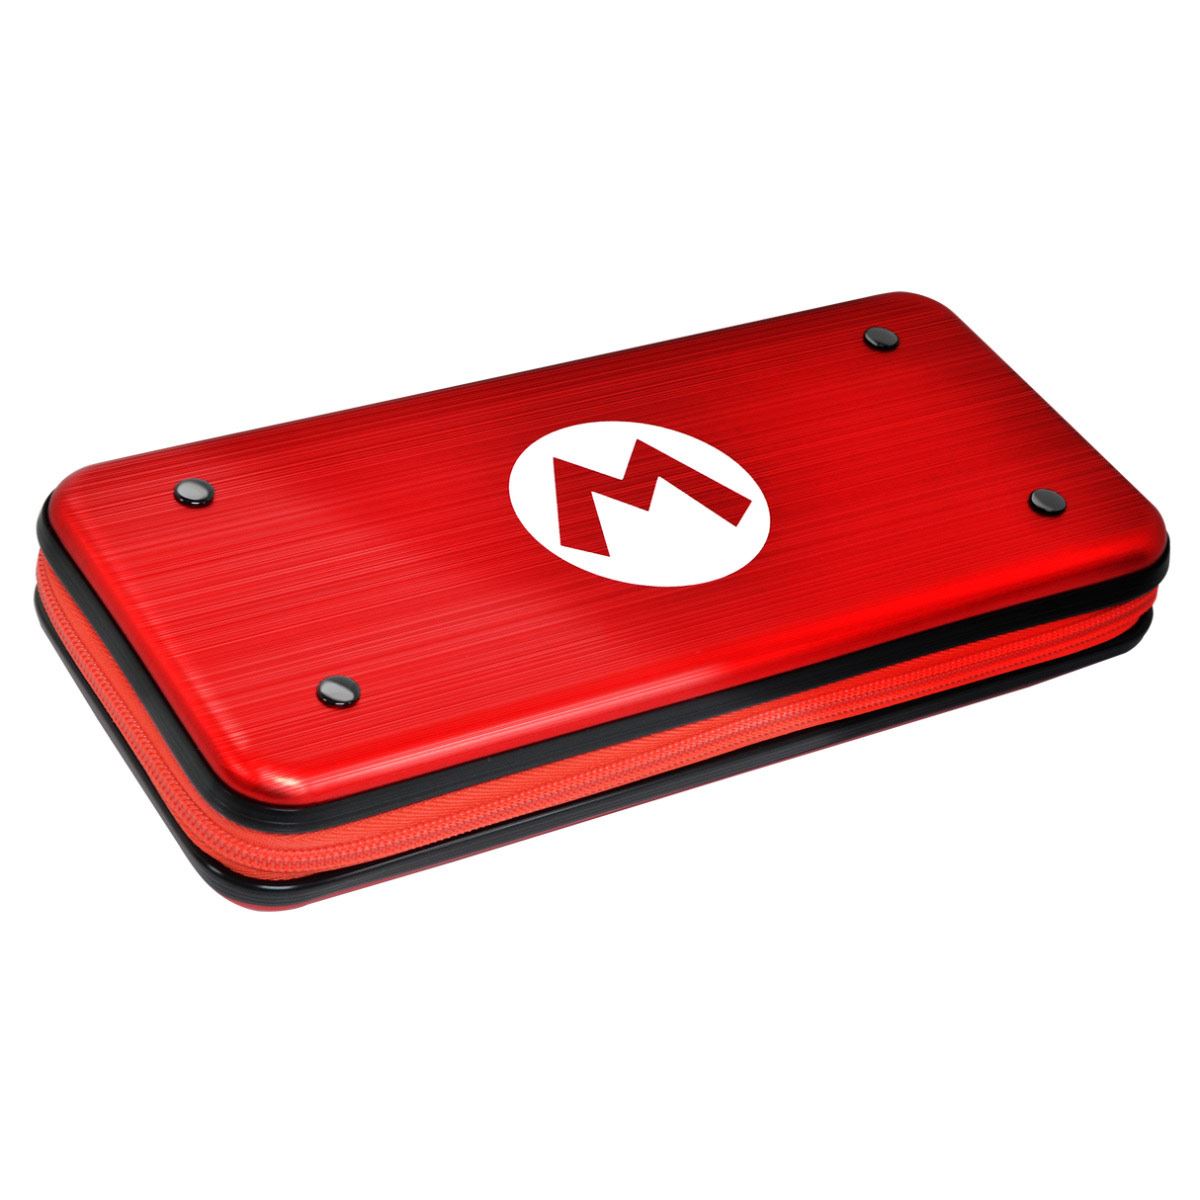 Estuche para Nintendo Switch Mario Bros Aluminio Rojo